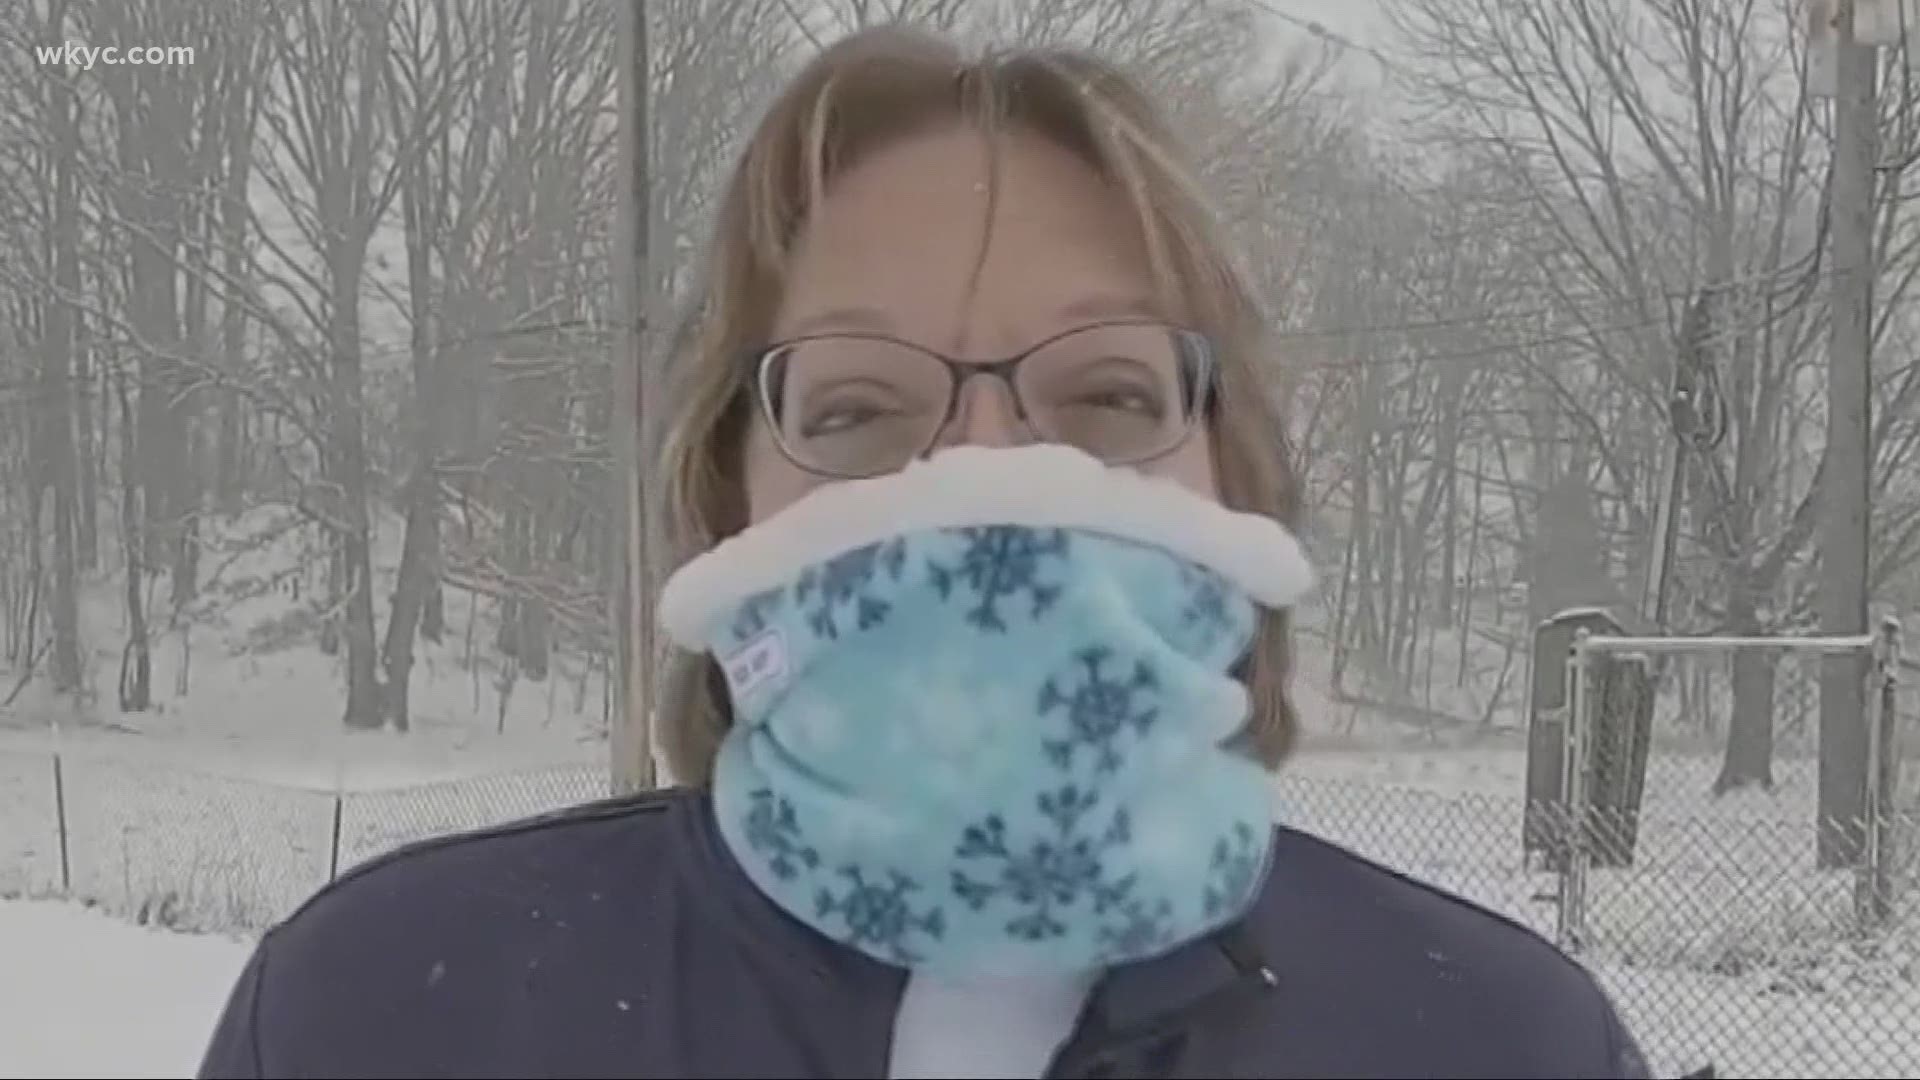 Cozy Noze fleece face coverings versatile way to keep warm in Winter. Carl Bachtel reports.